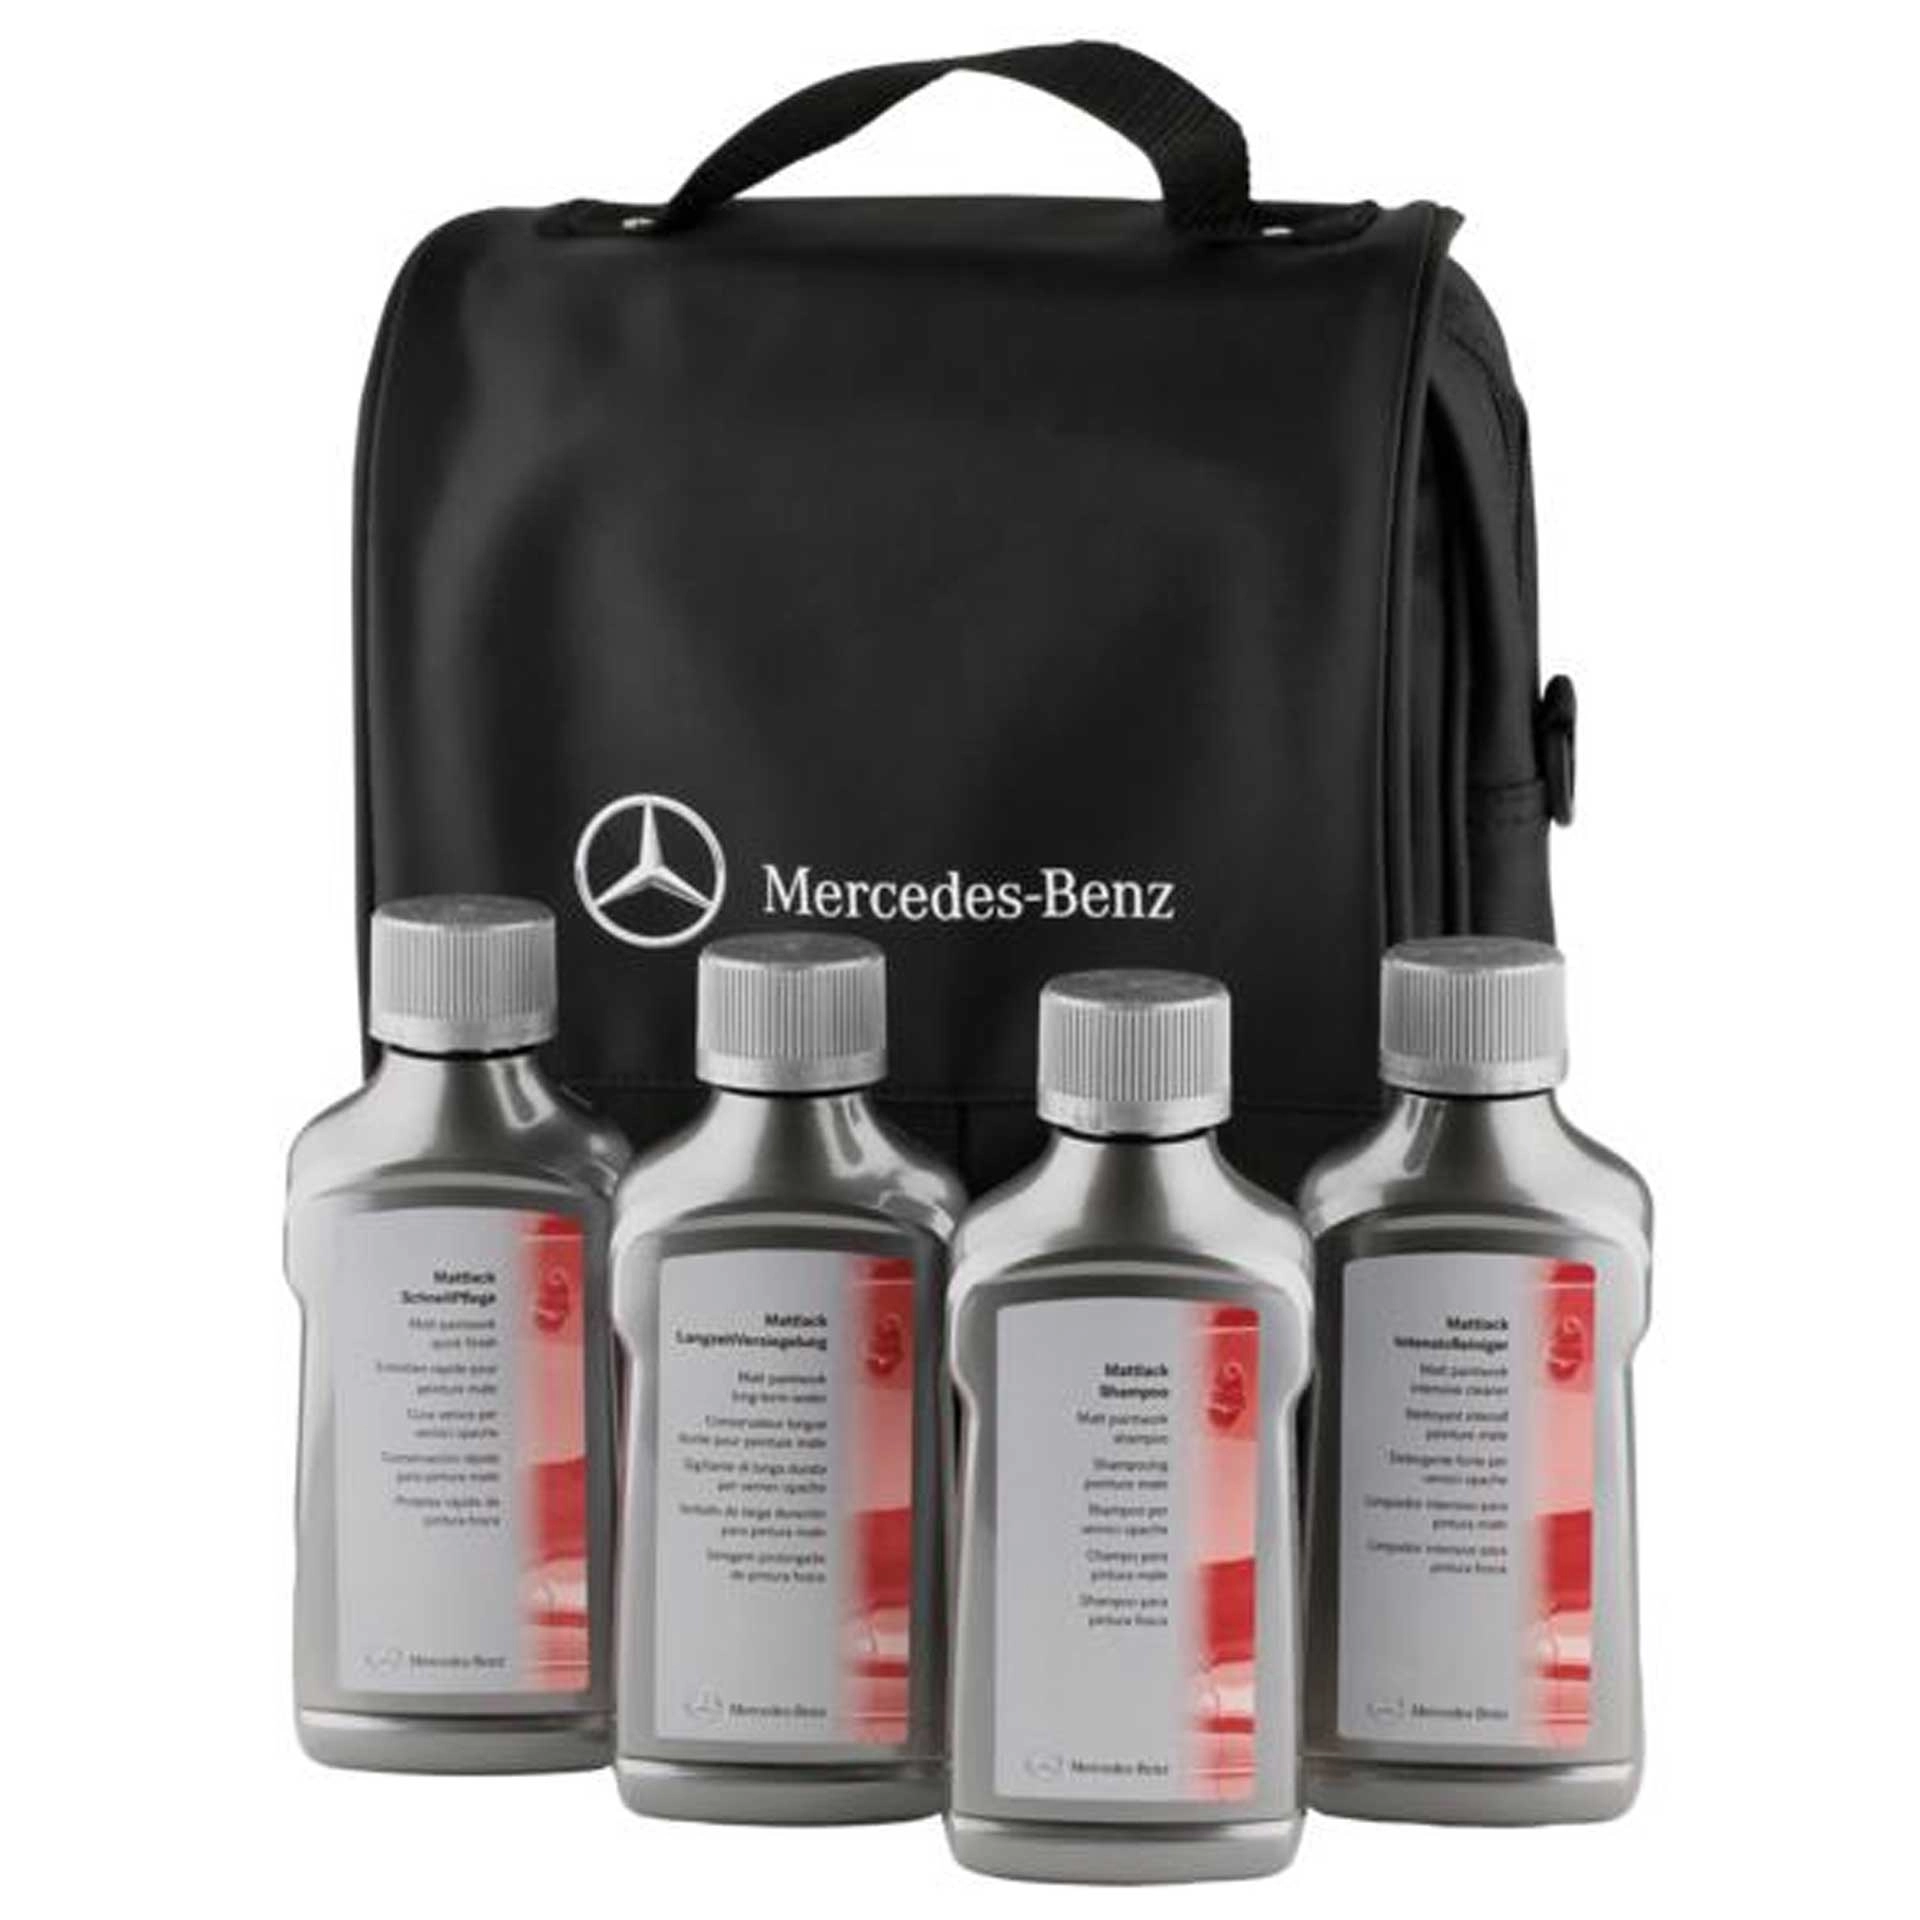 Mercedes-Benz Pflegekit Mattlack Shampoo Politur Reiniger Versiegelung 5-teilig